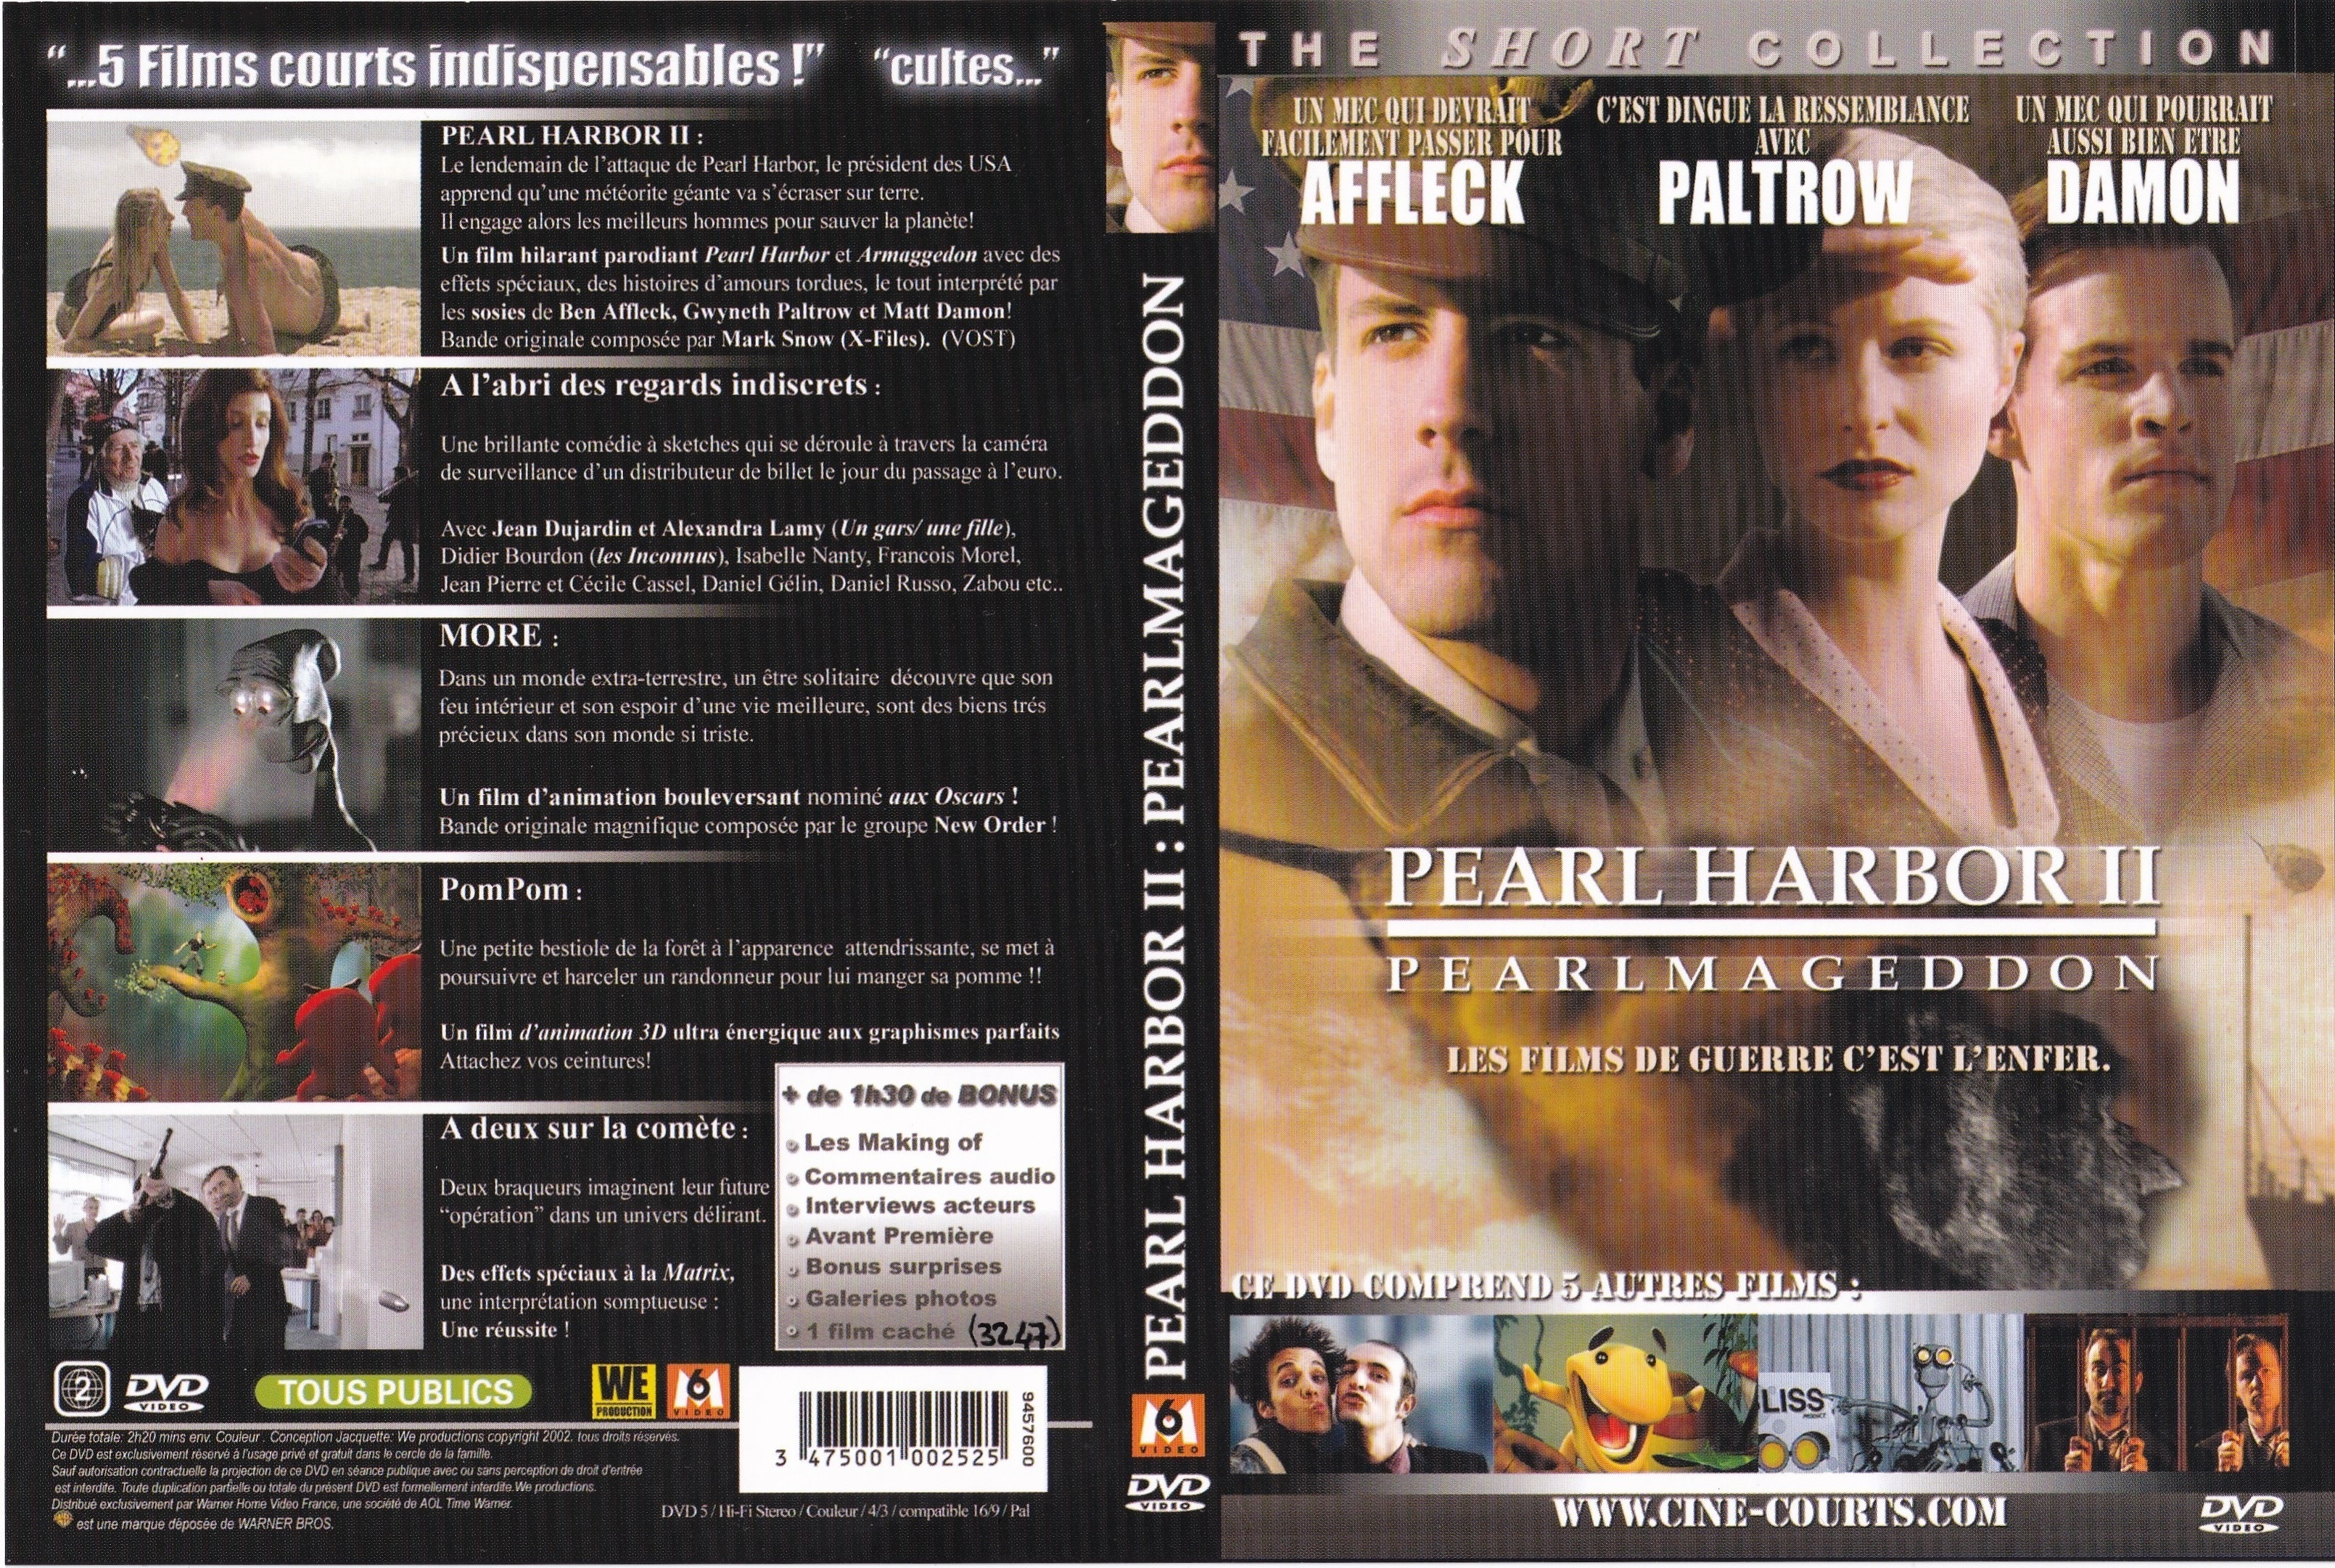 Jaquette DVD Pearl Harbor II Pearlmageddon